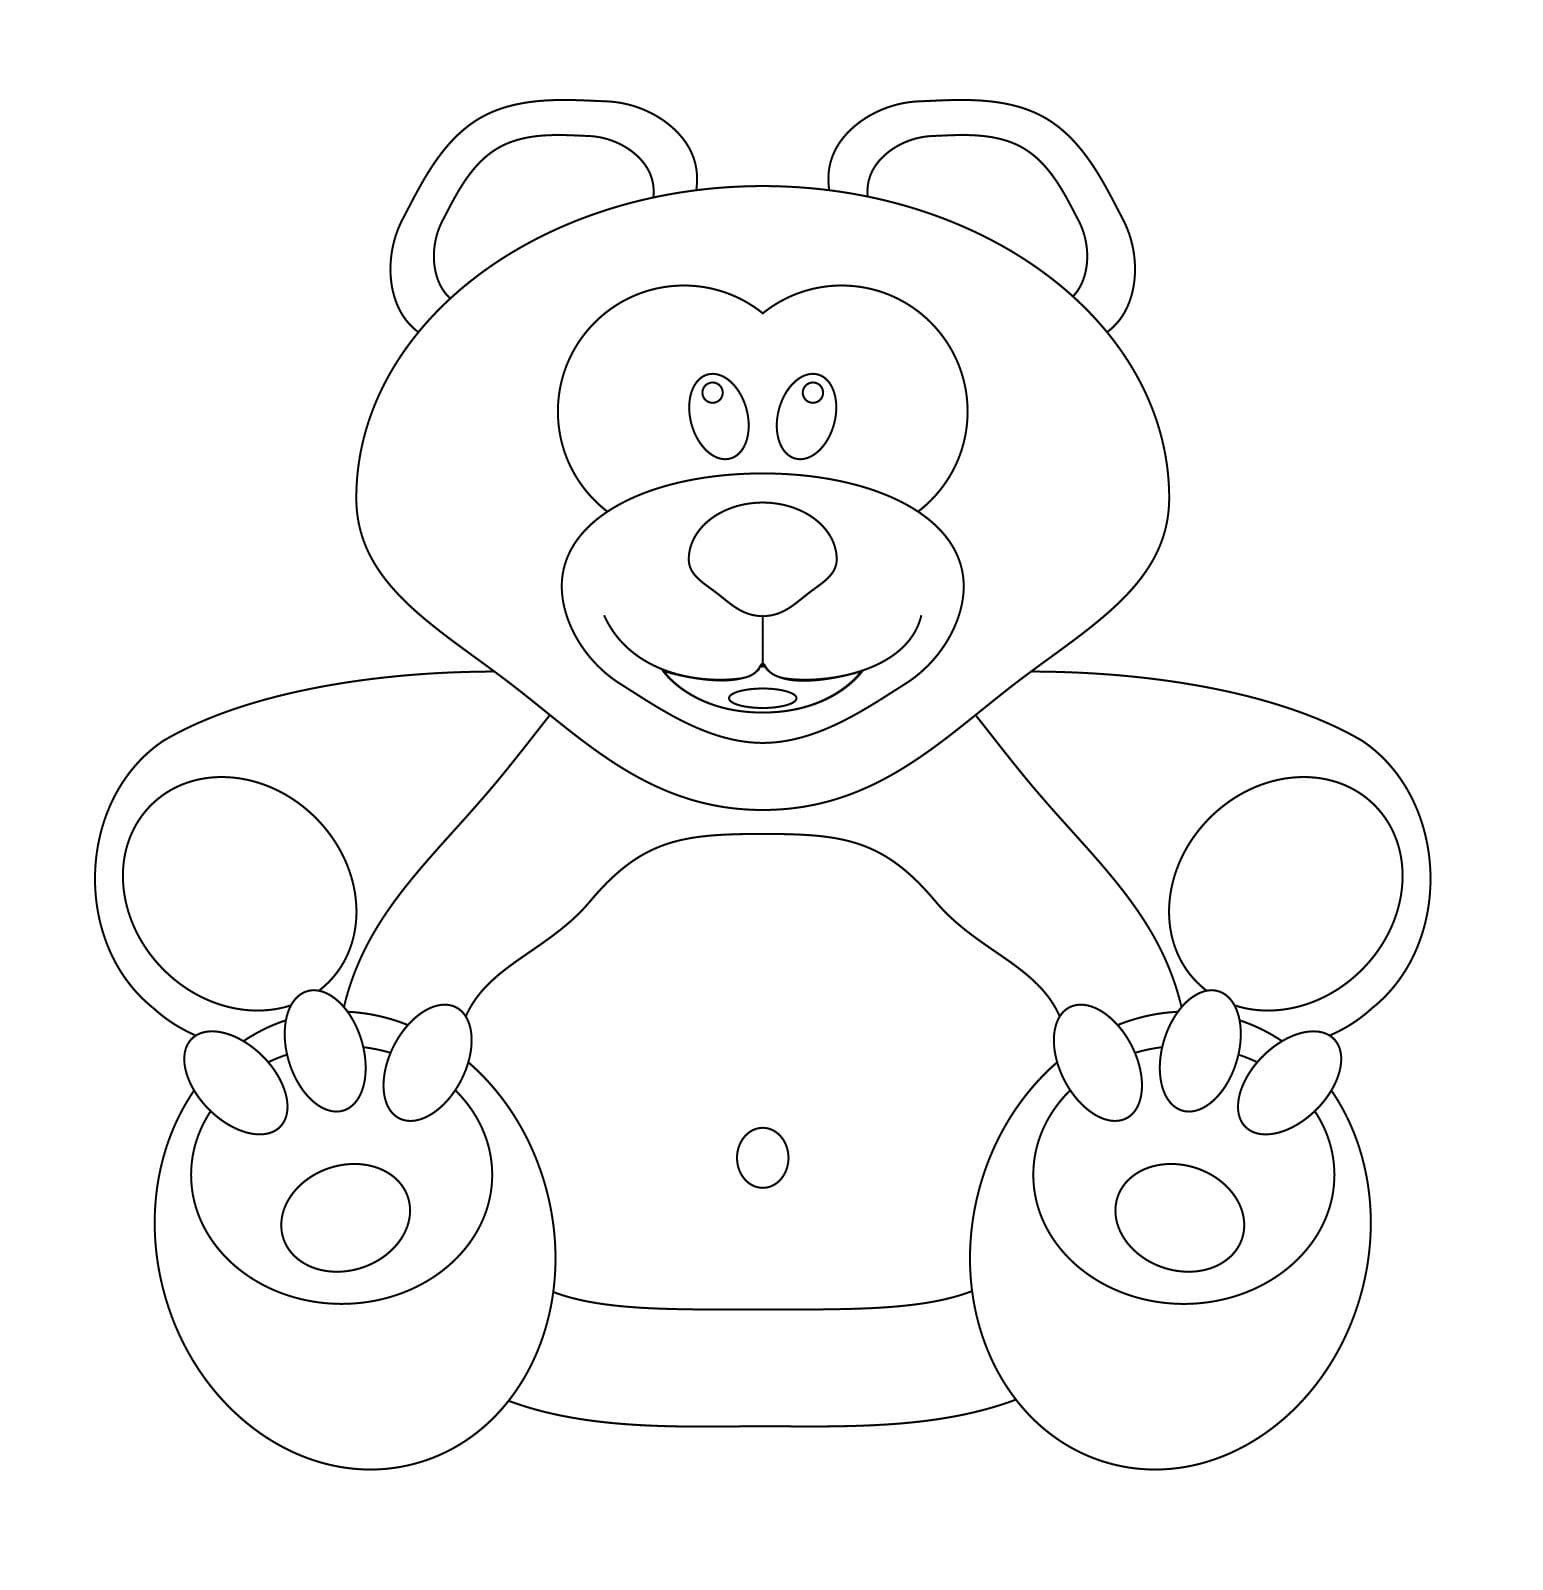 Coloring page Teddy Bears Big teddy bear